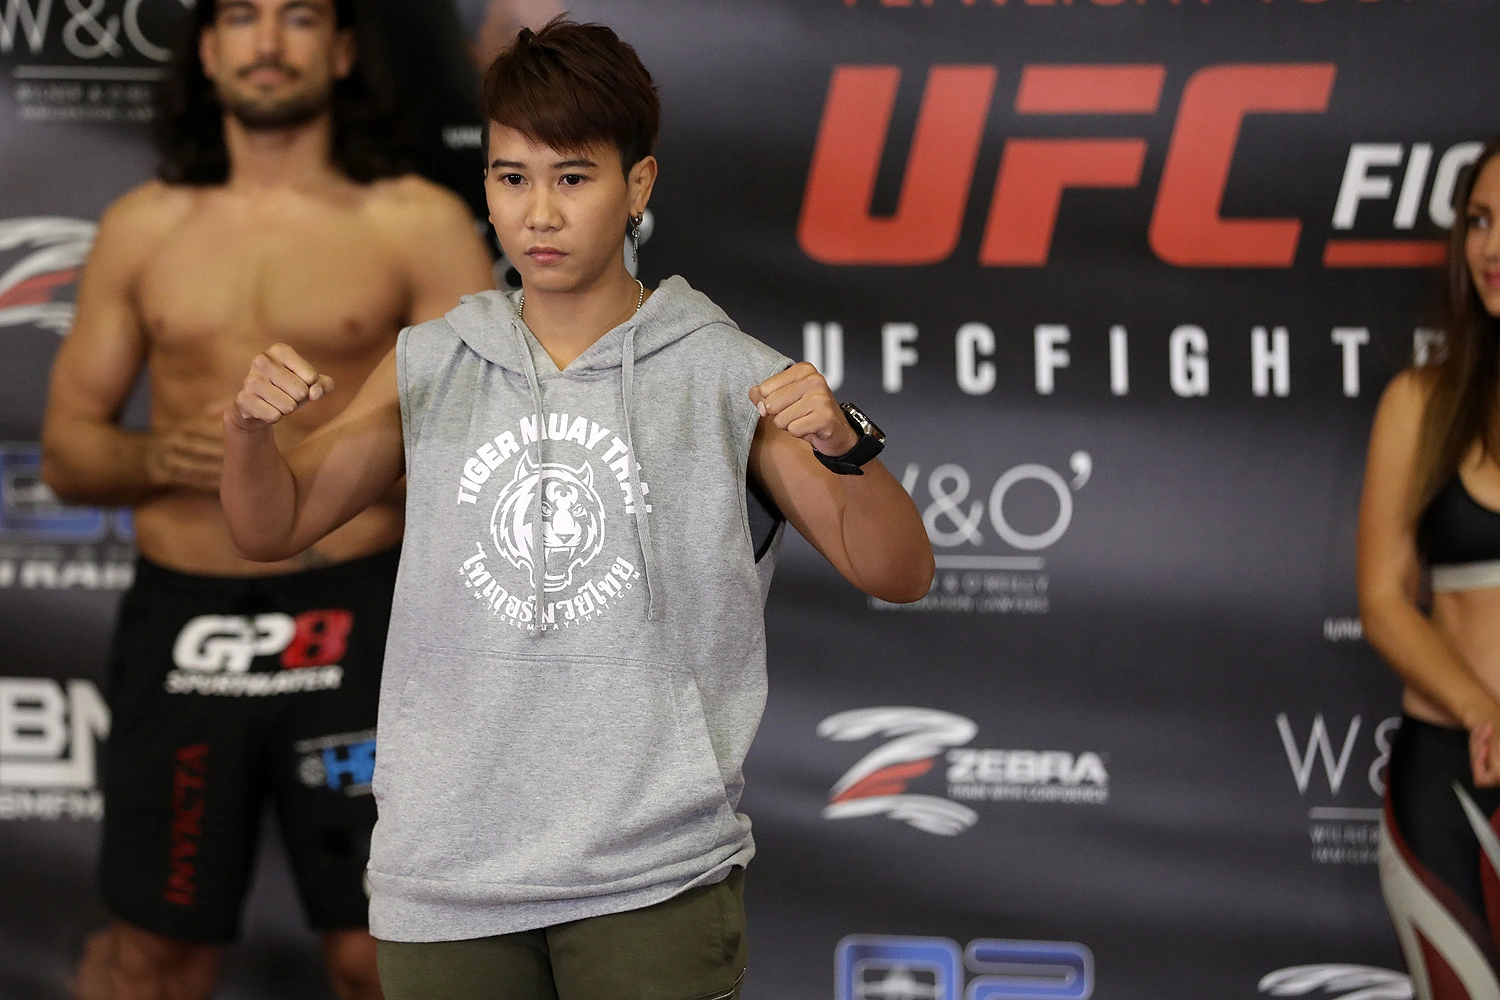 Thailand's Women's UFC Fighting Star Prepares for Vegas Battle